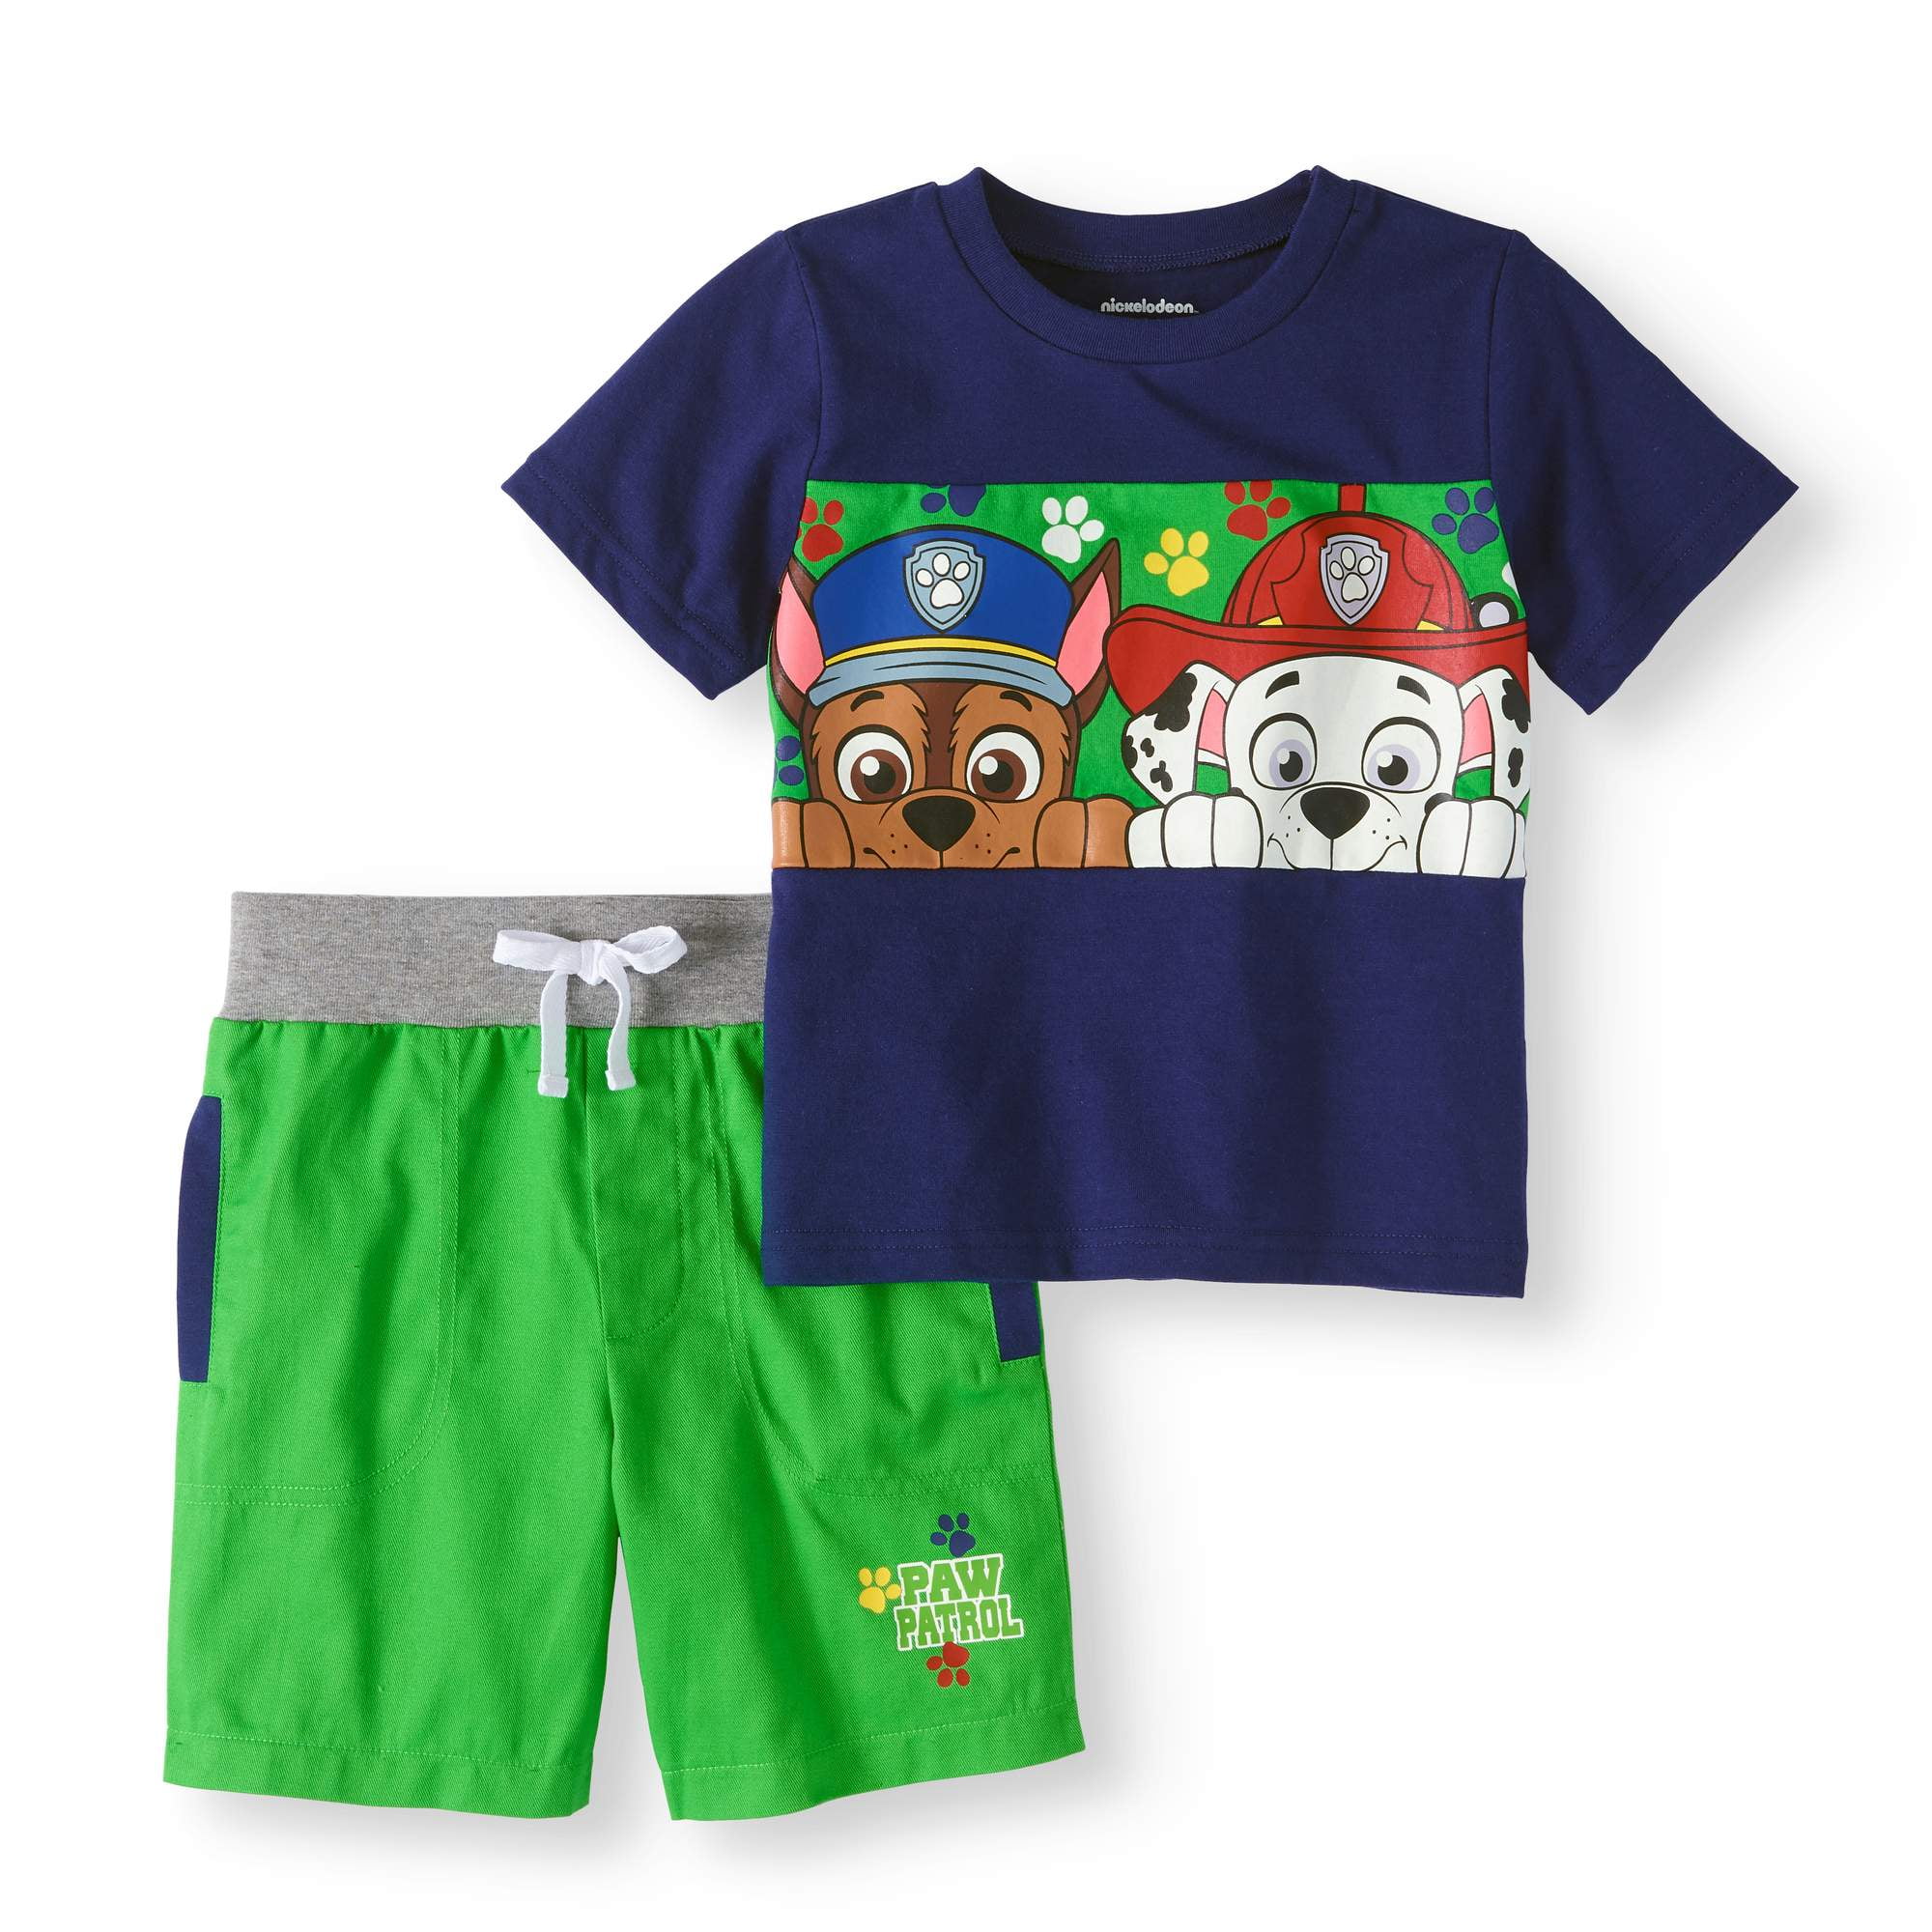 Brand New PAW Patrol t-shirt top Tshirt shorts kids summer outfit boys 2pc set 